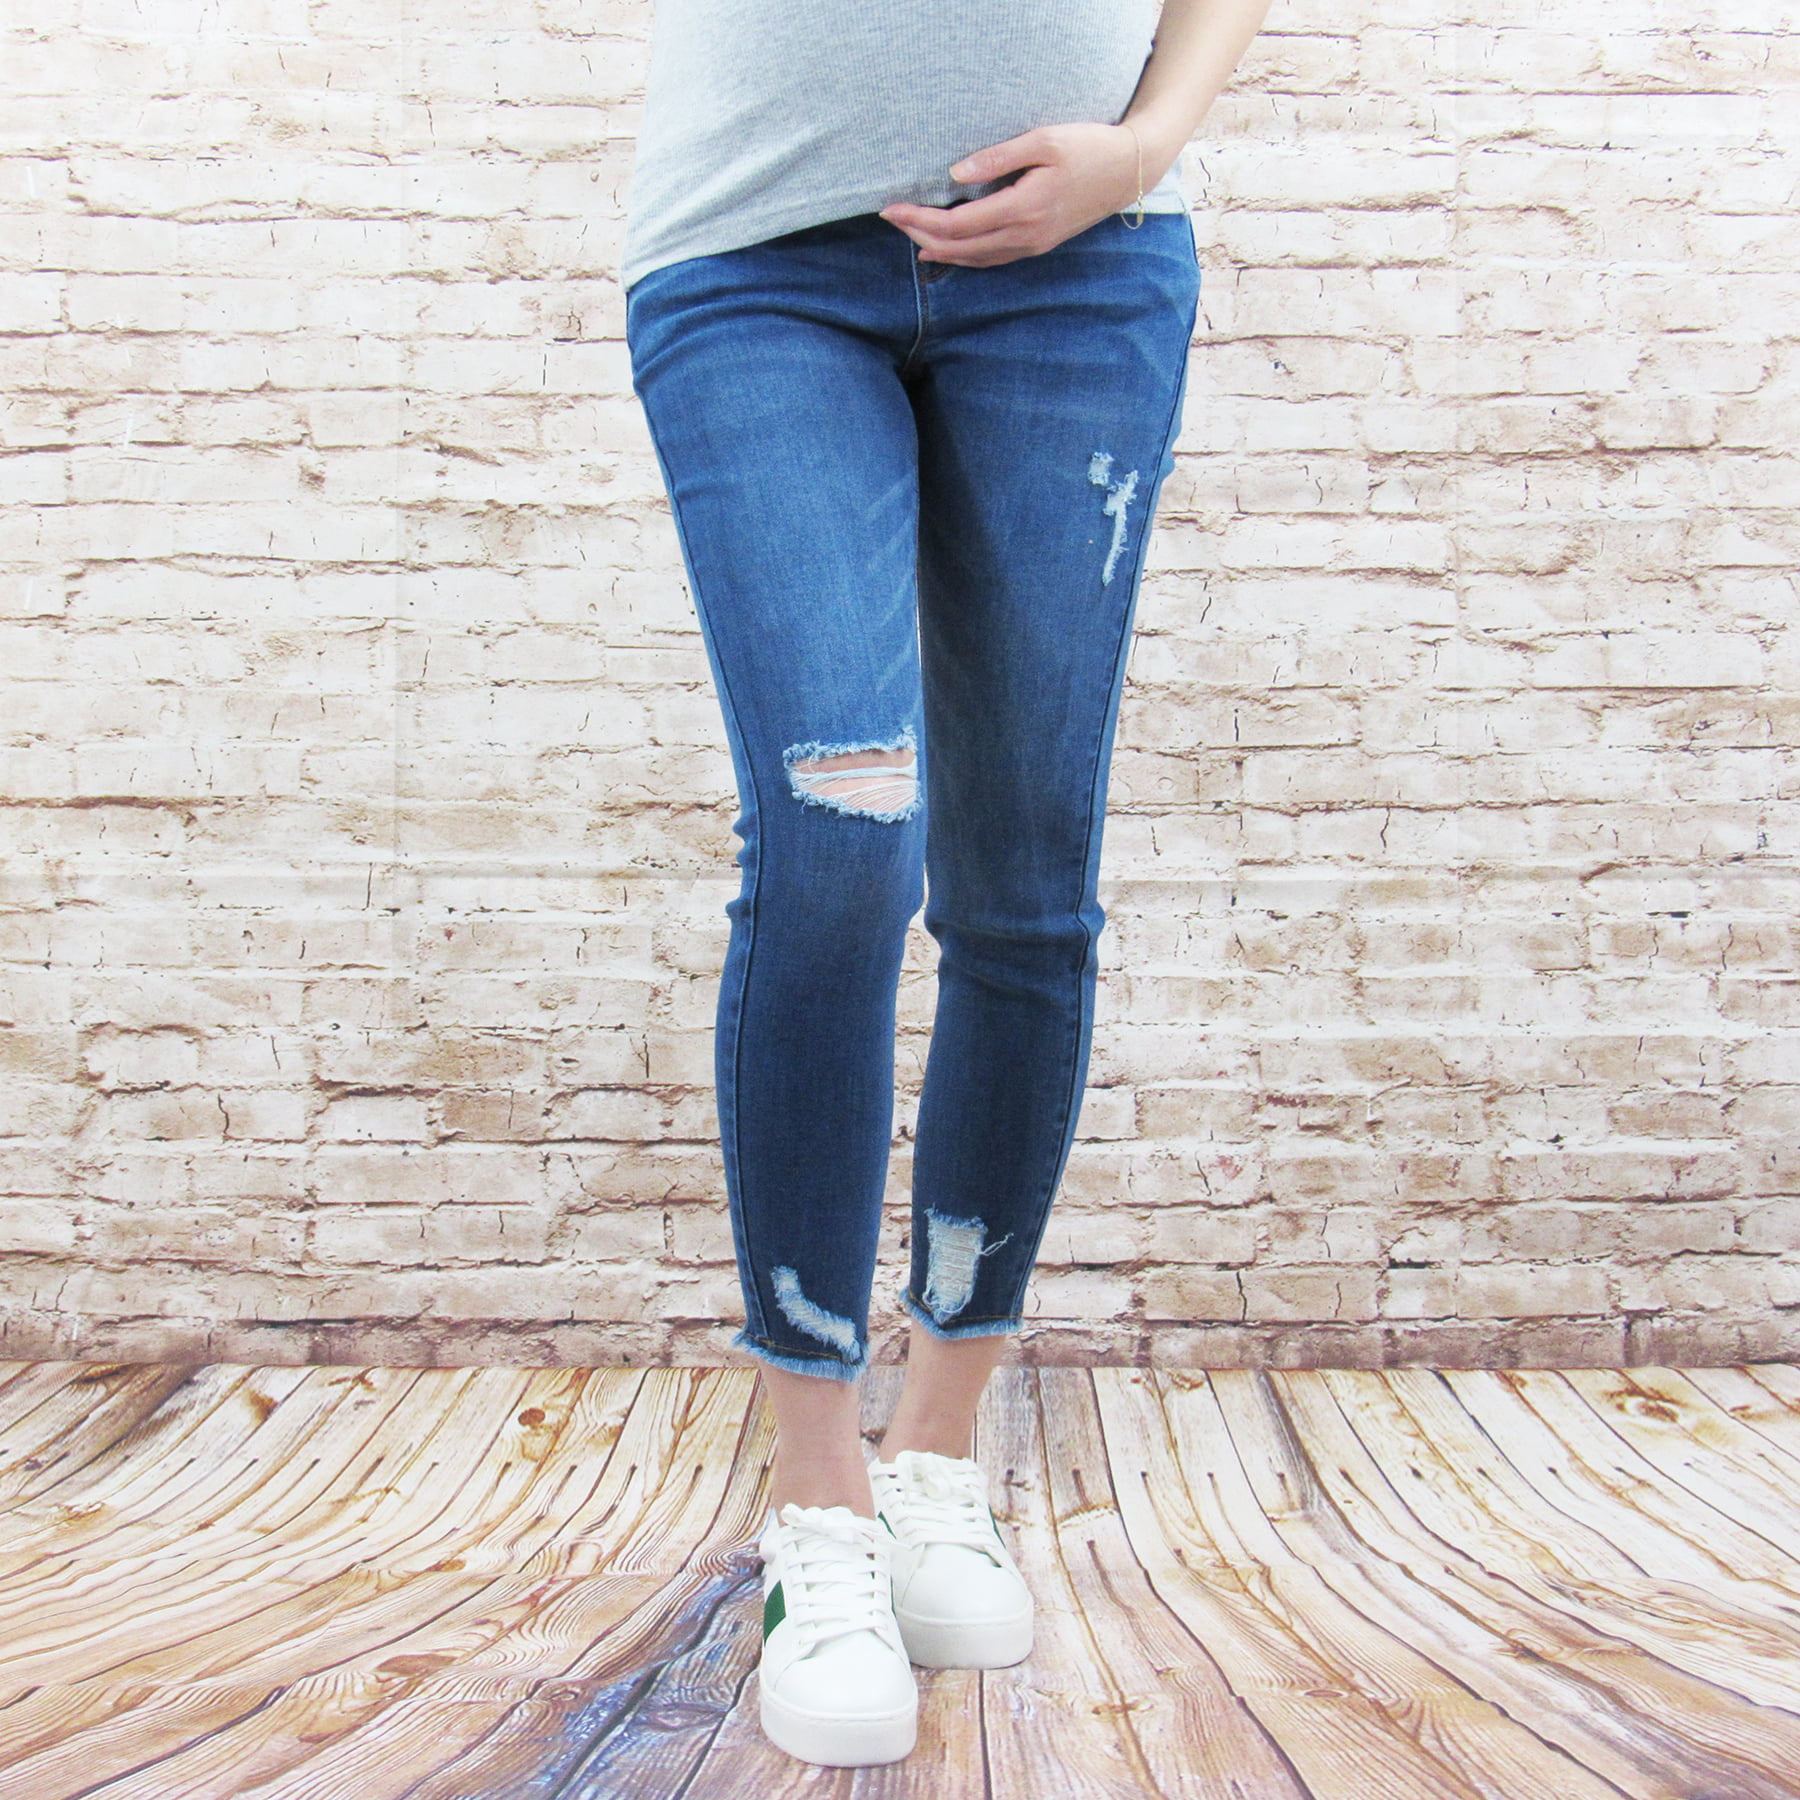 Elastic Waist Baby Bump Denim Pants Ripped Jeggings Trousers Leggings LowProfile Womens Comfortable Maternity Jeans 